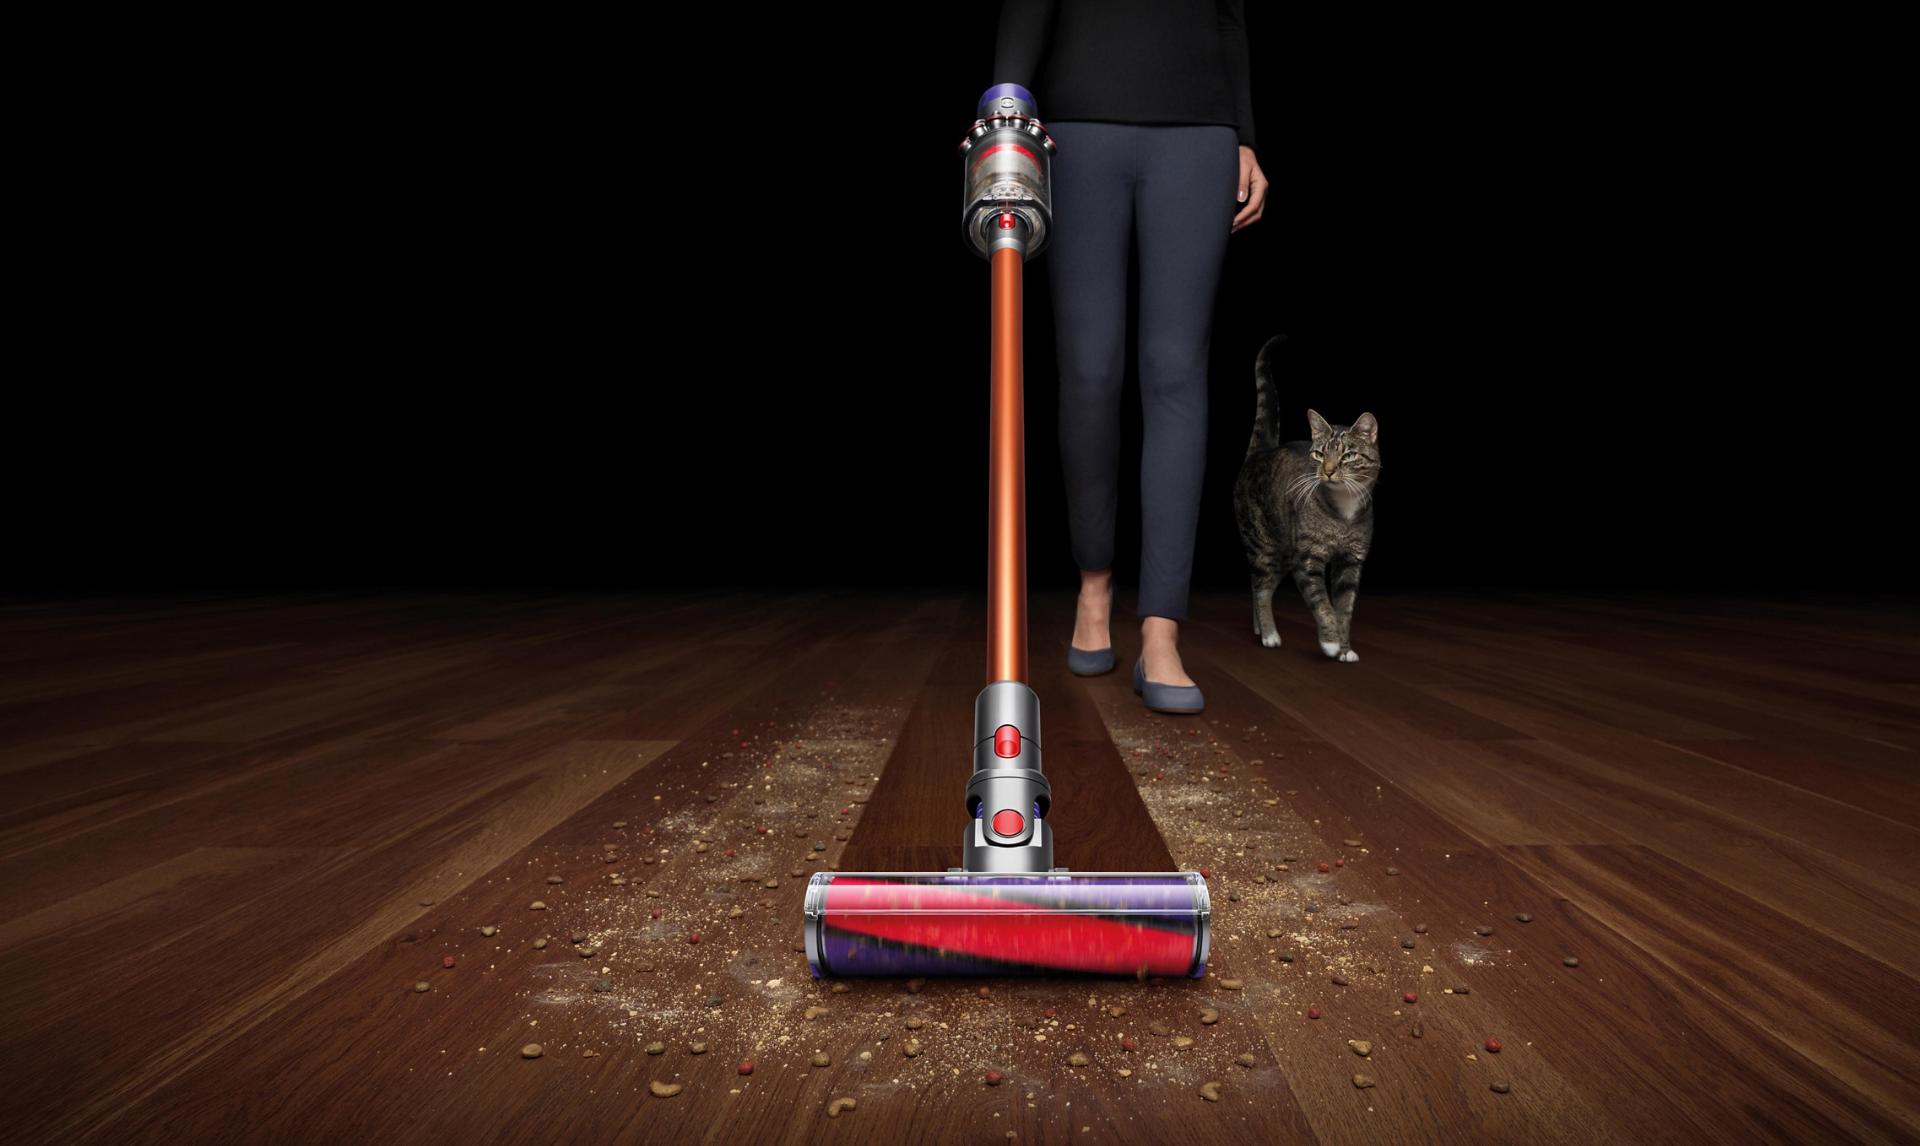 Women vacuuming with cat following